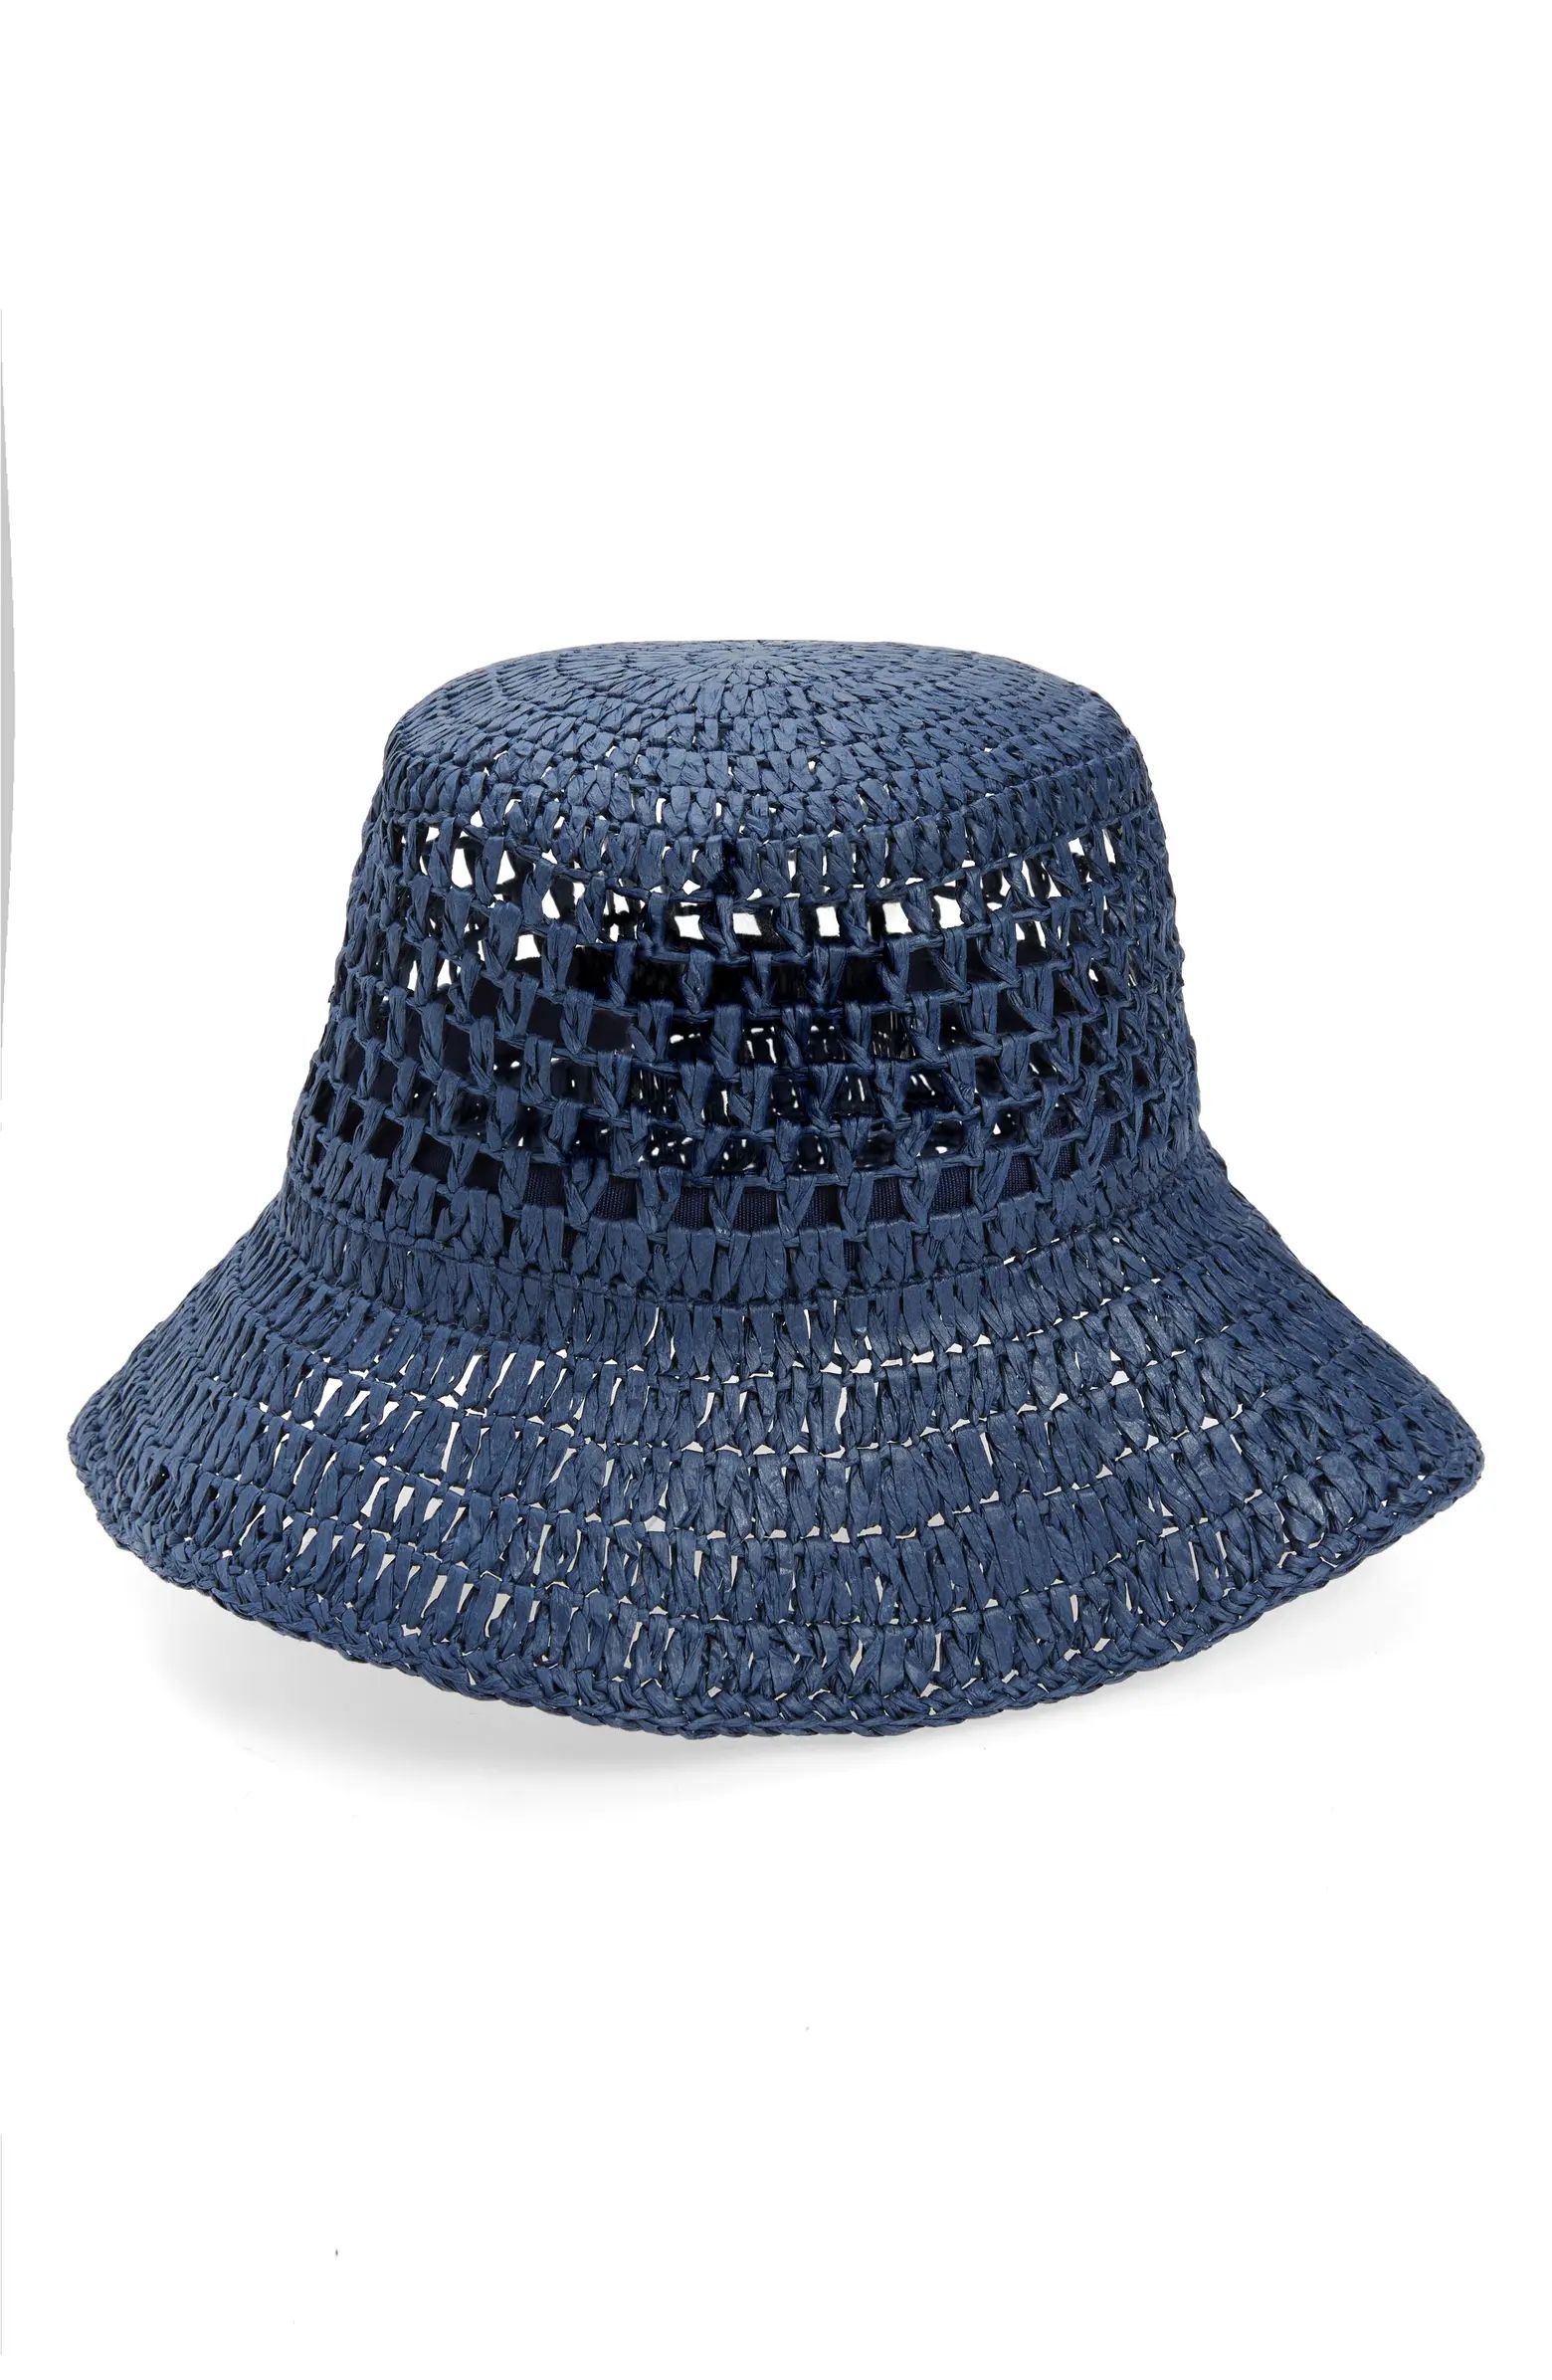 LITA by Ciara Open Weave Straw Bucket Hat | Nordstrom | Nordstrom